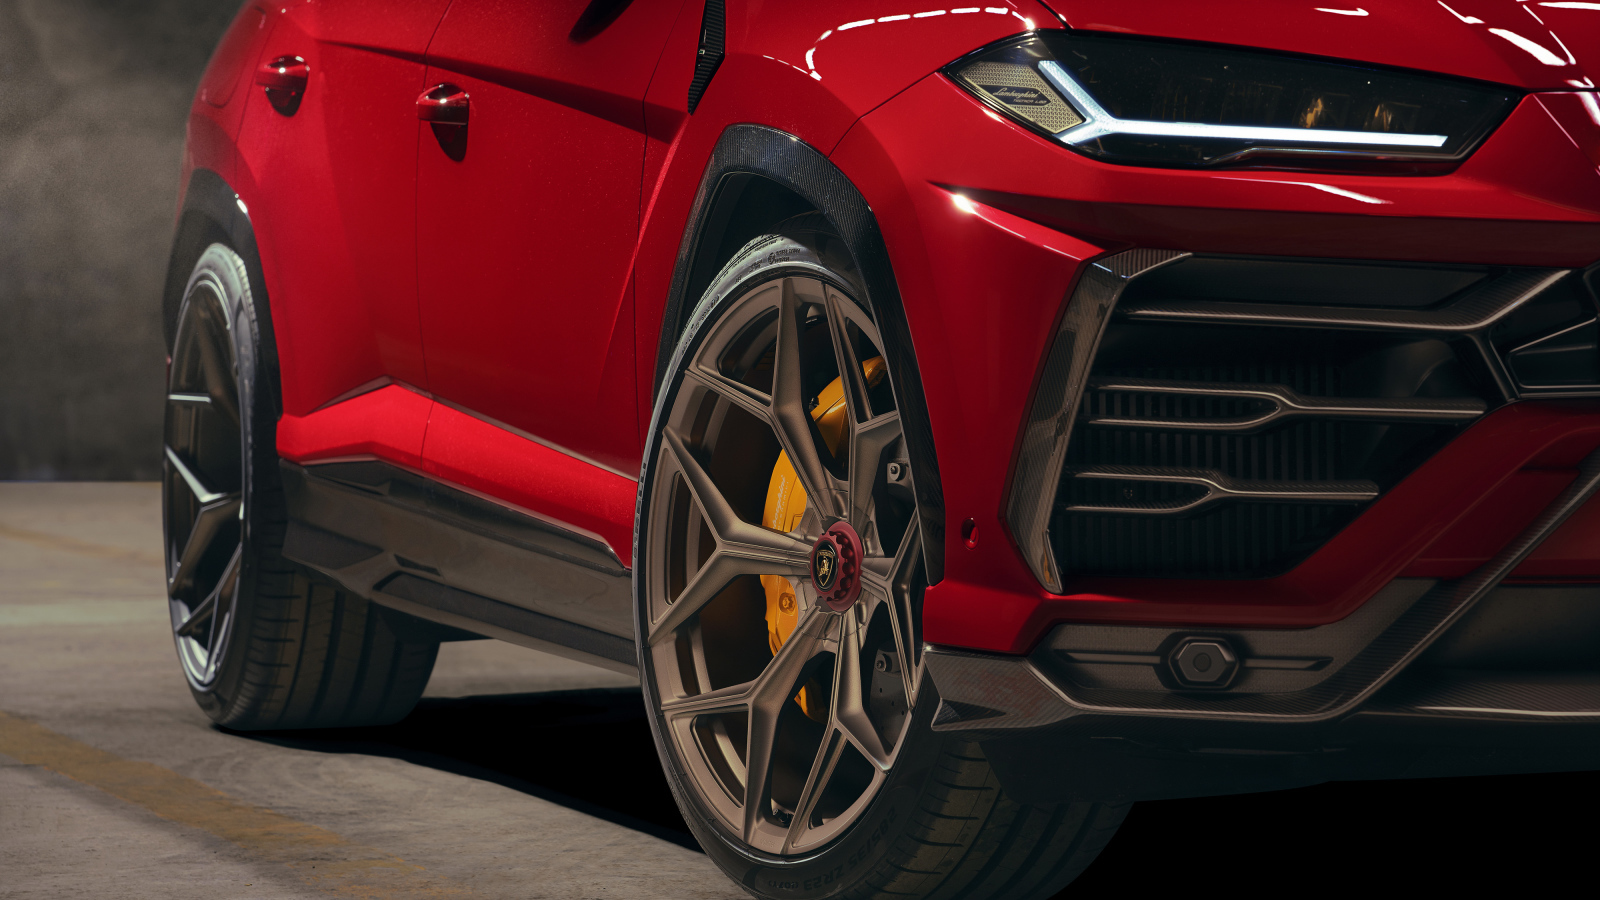 Колеса красного автомобиля  Lamborghini Urus 2019 года